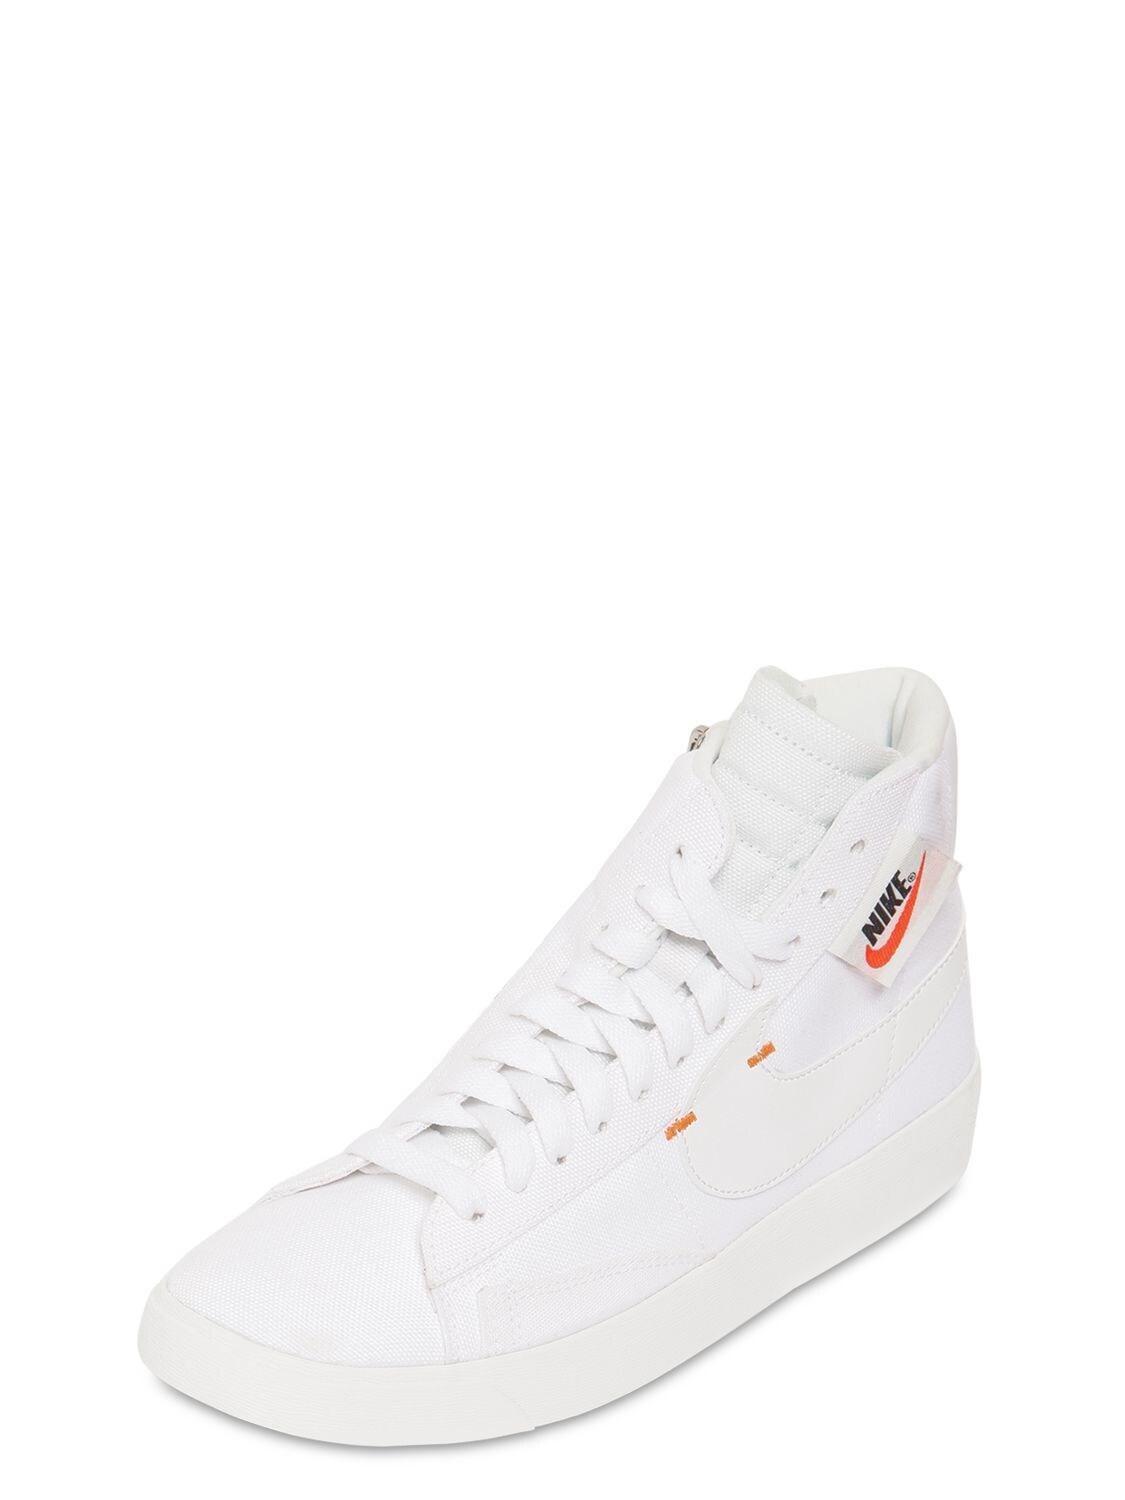 Nike Blazer Mid Rebel Sneakers in White for Men - Lyst